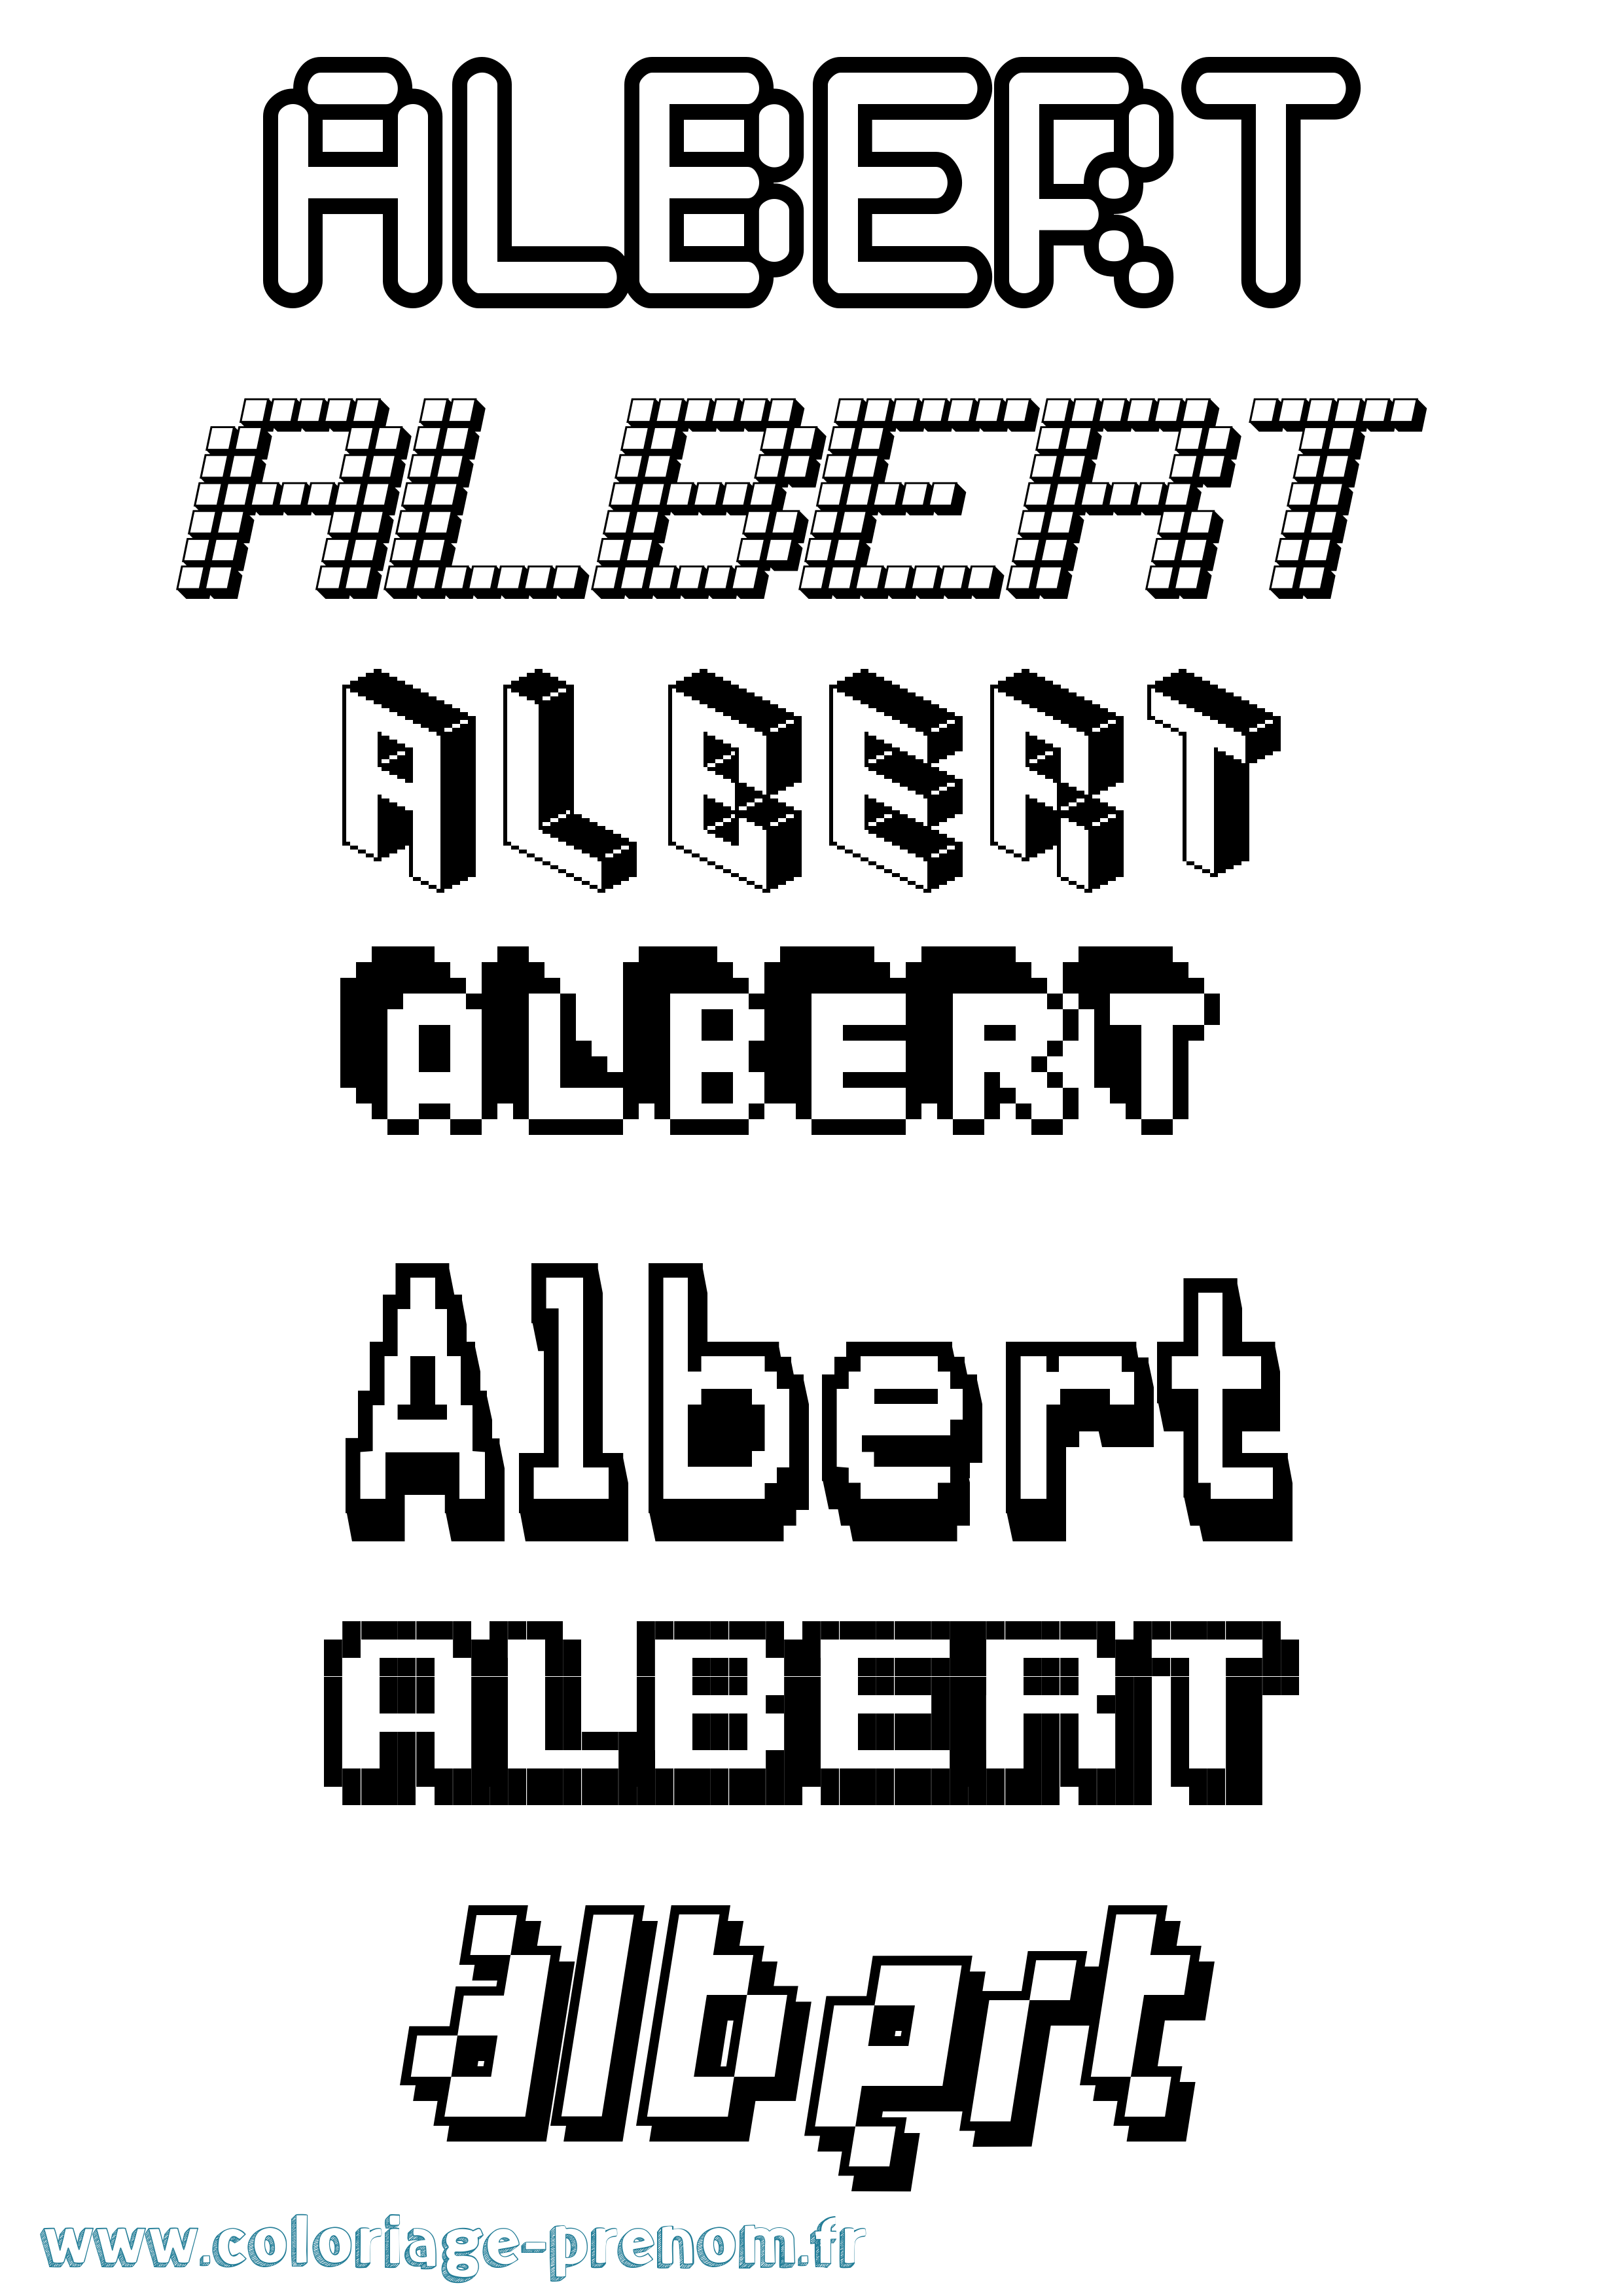 Coloriage prénom Albert Pixel